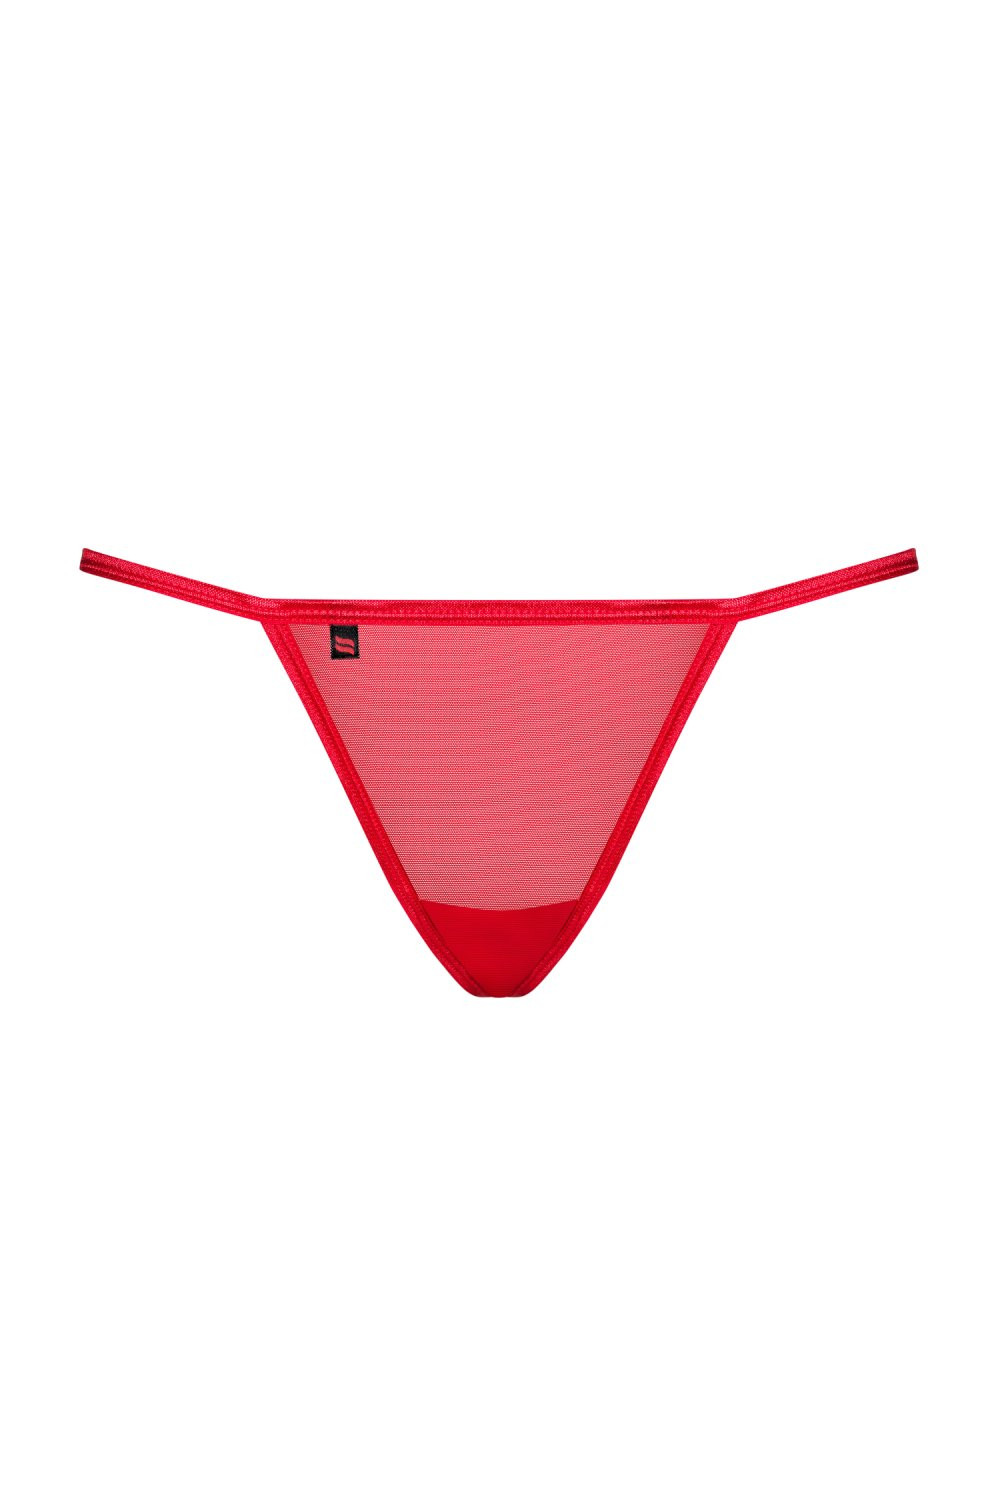 Erotická tanga model 16133685 thong červená L/XL - Obsessive